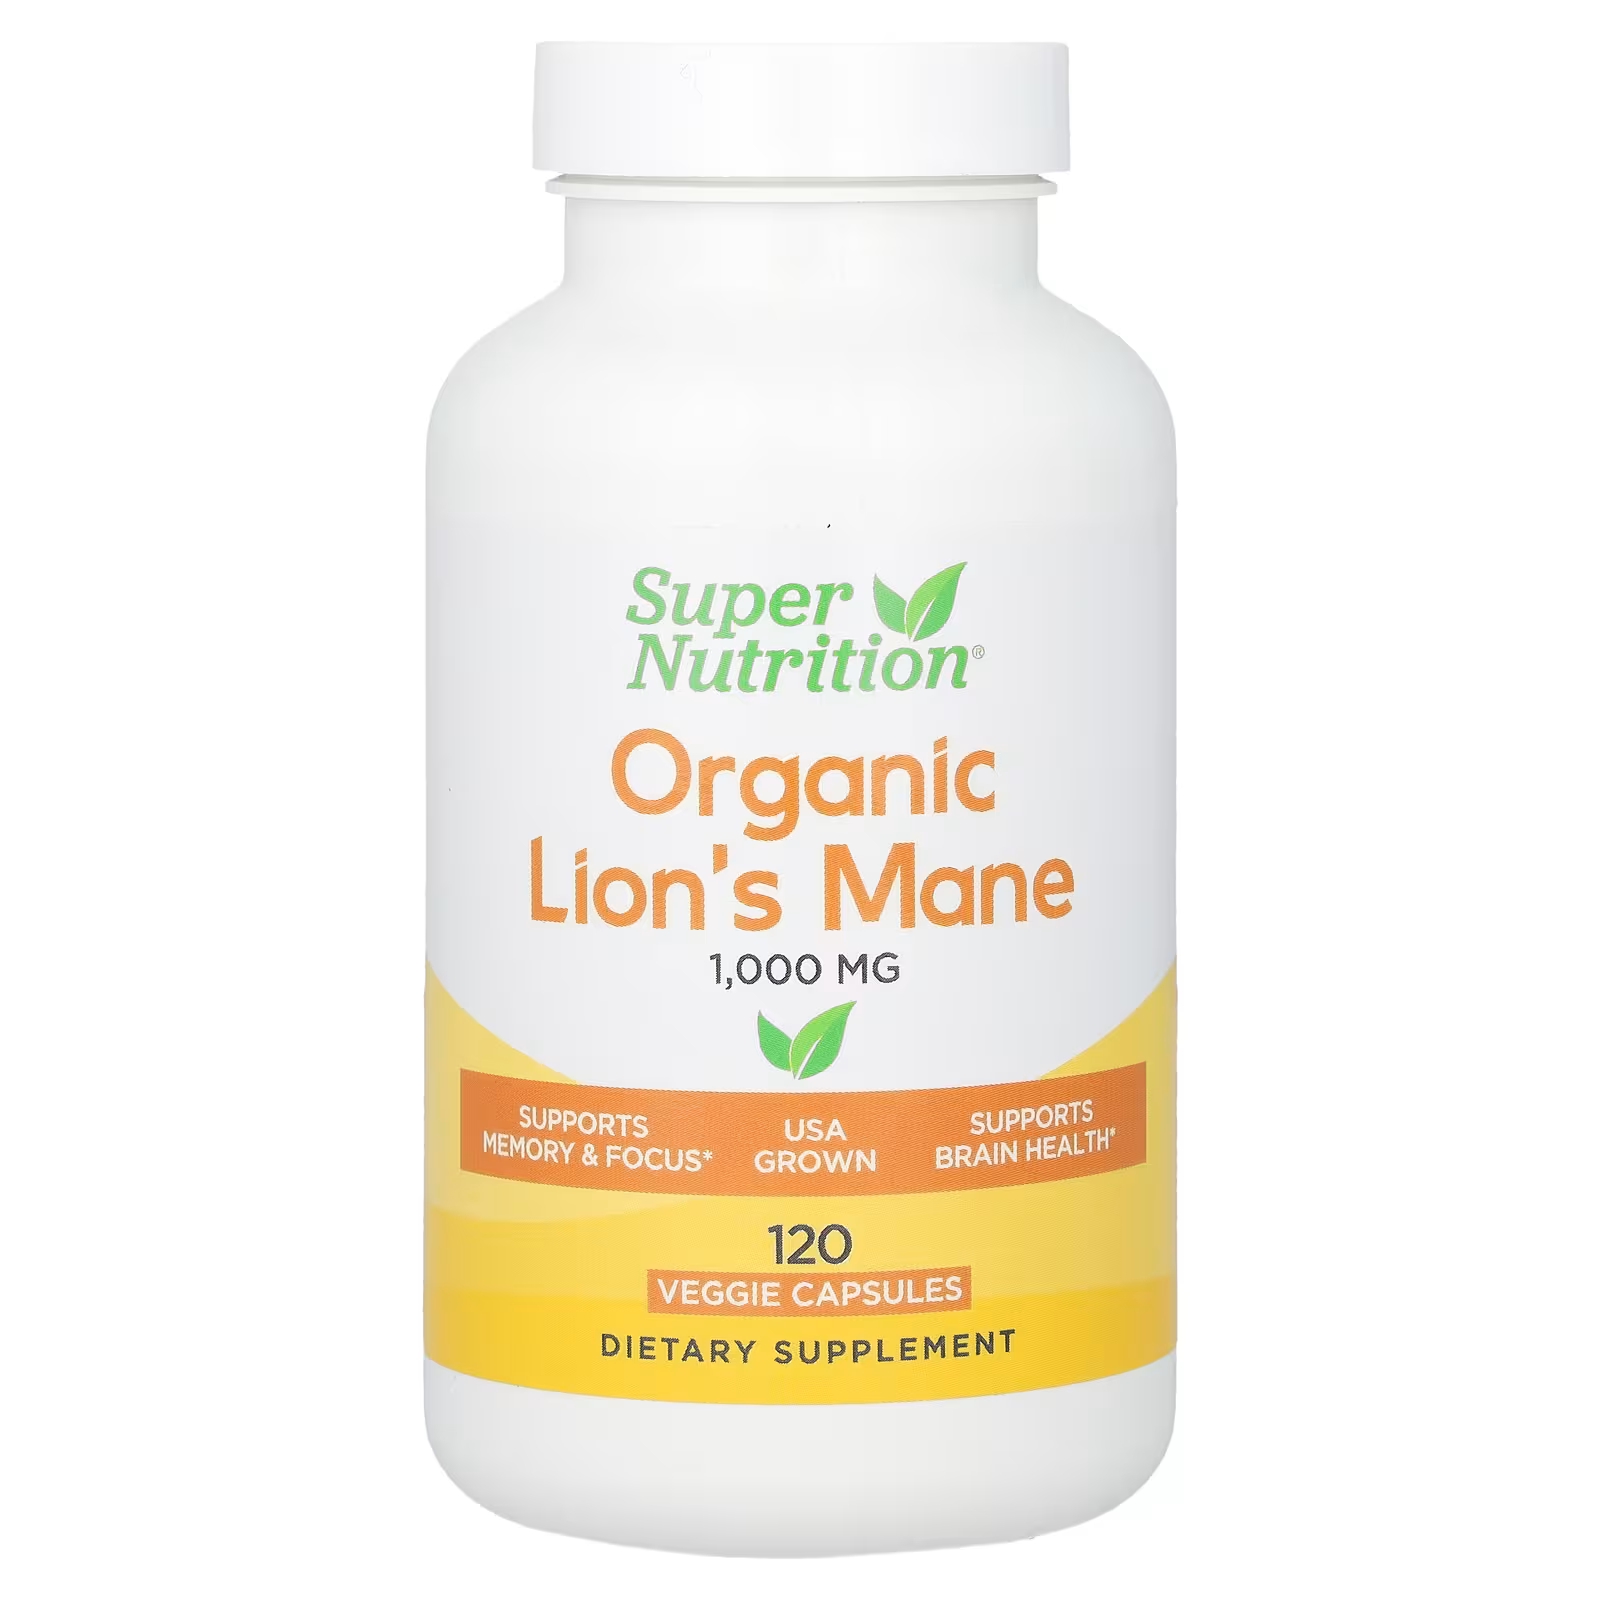 Super Nutrition Organic Lion's Mane 1000 мг, 120 растительных капсул (500 мг на капсулу) evlution nutrition говяжья печень 3000 мг 120 капсул 750 мг на капсулу